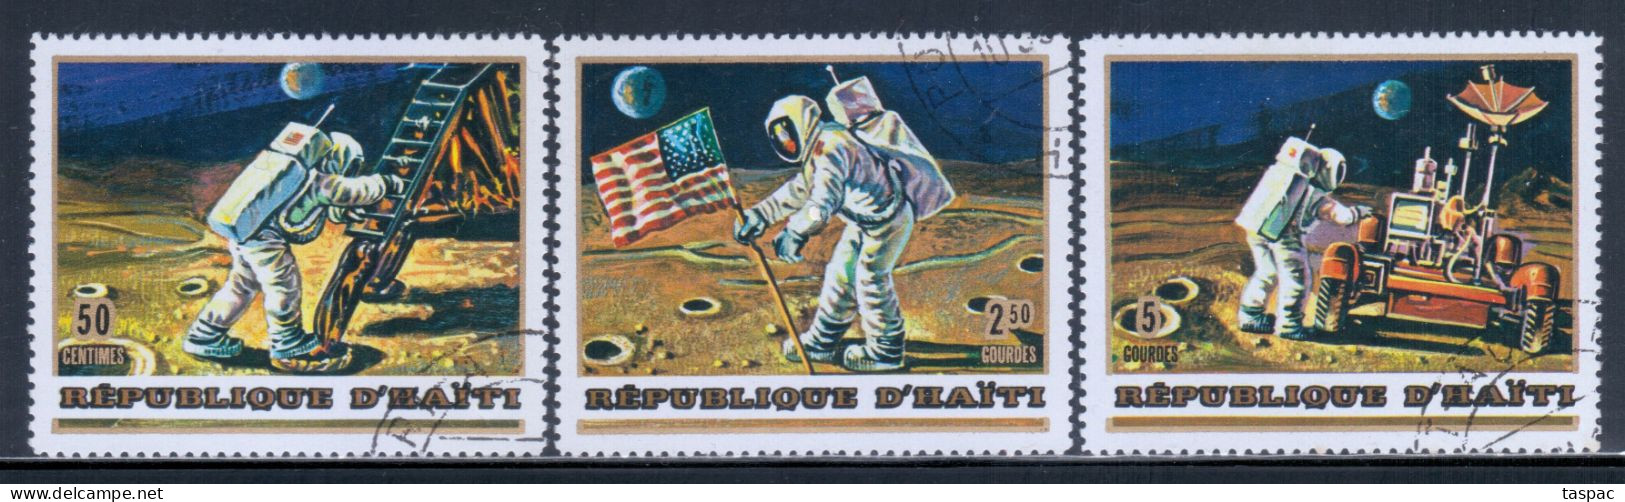 Haiti 1973 Mi# Not Listed - Unofficial Set Of 3 Used - Apollo / Space - Haití